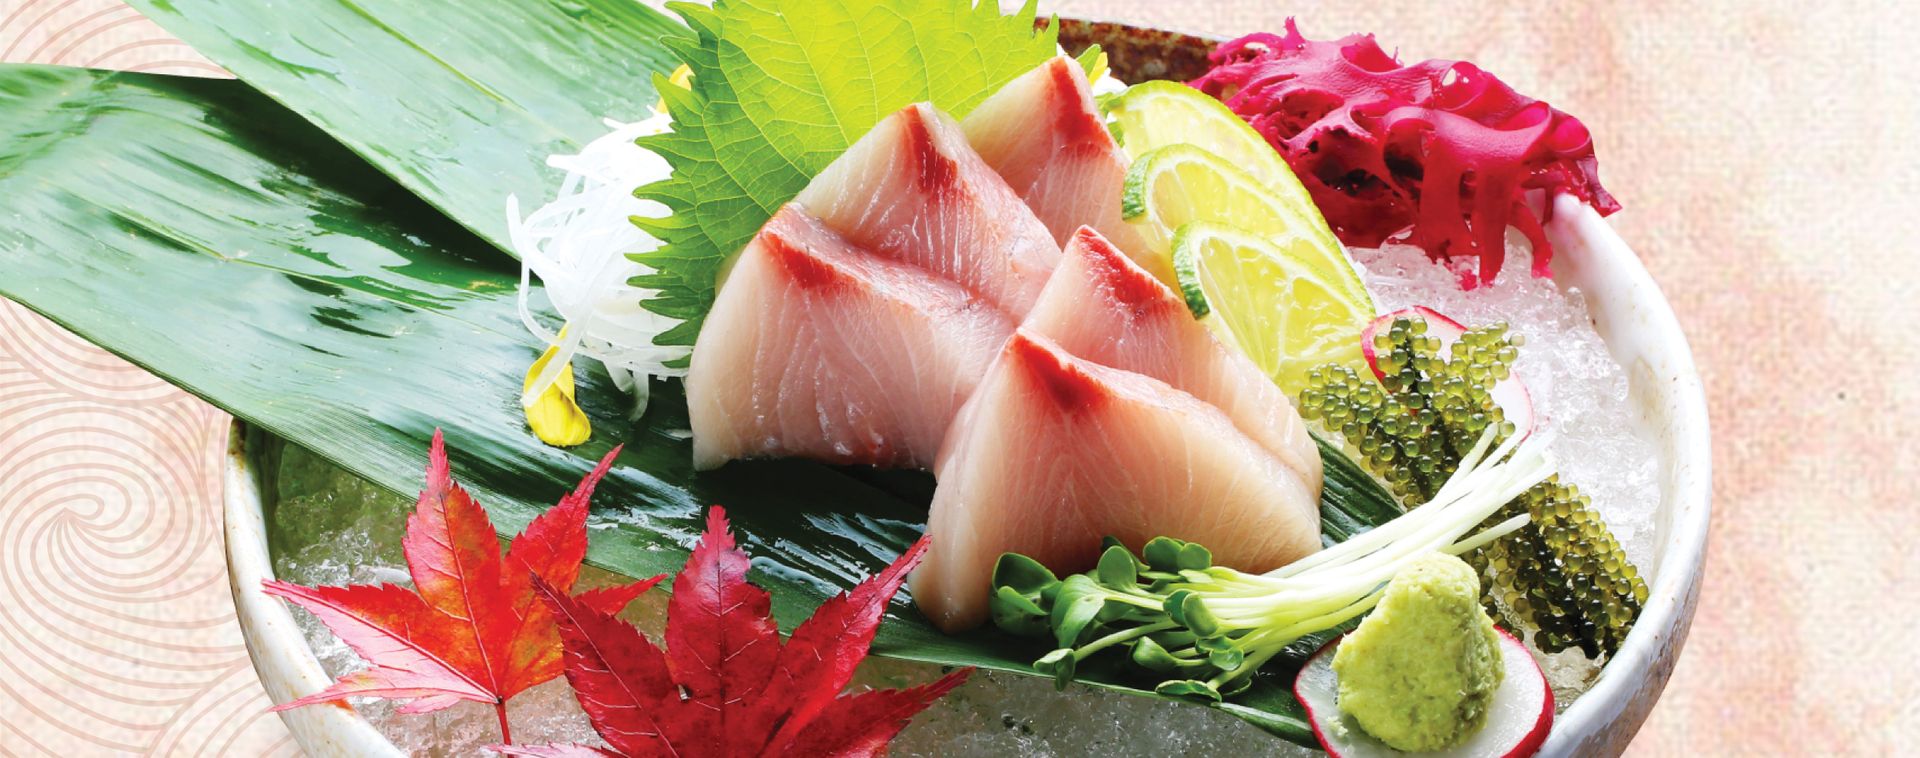 <span>What attracts 8000 vistors per day at Fukuoka - the largest fish market of Japan?</span>